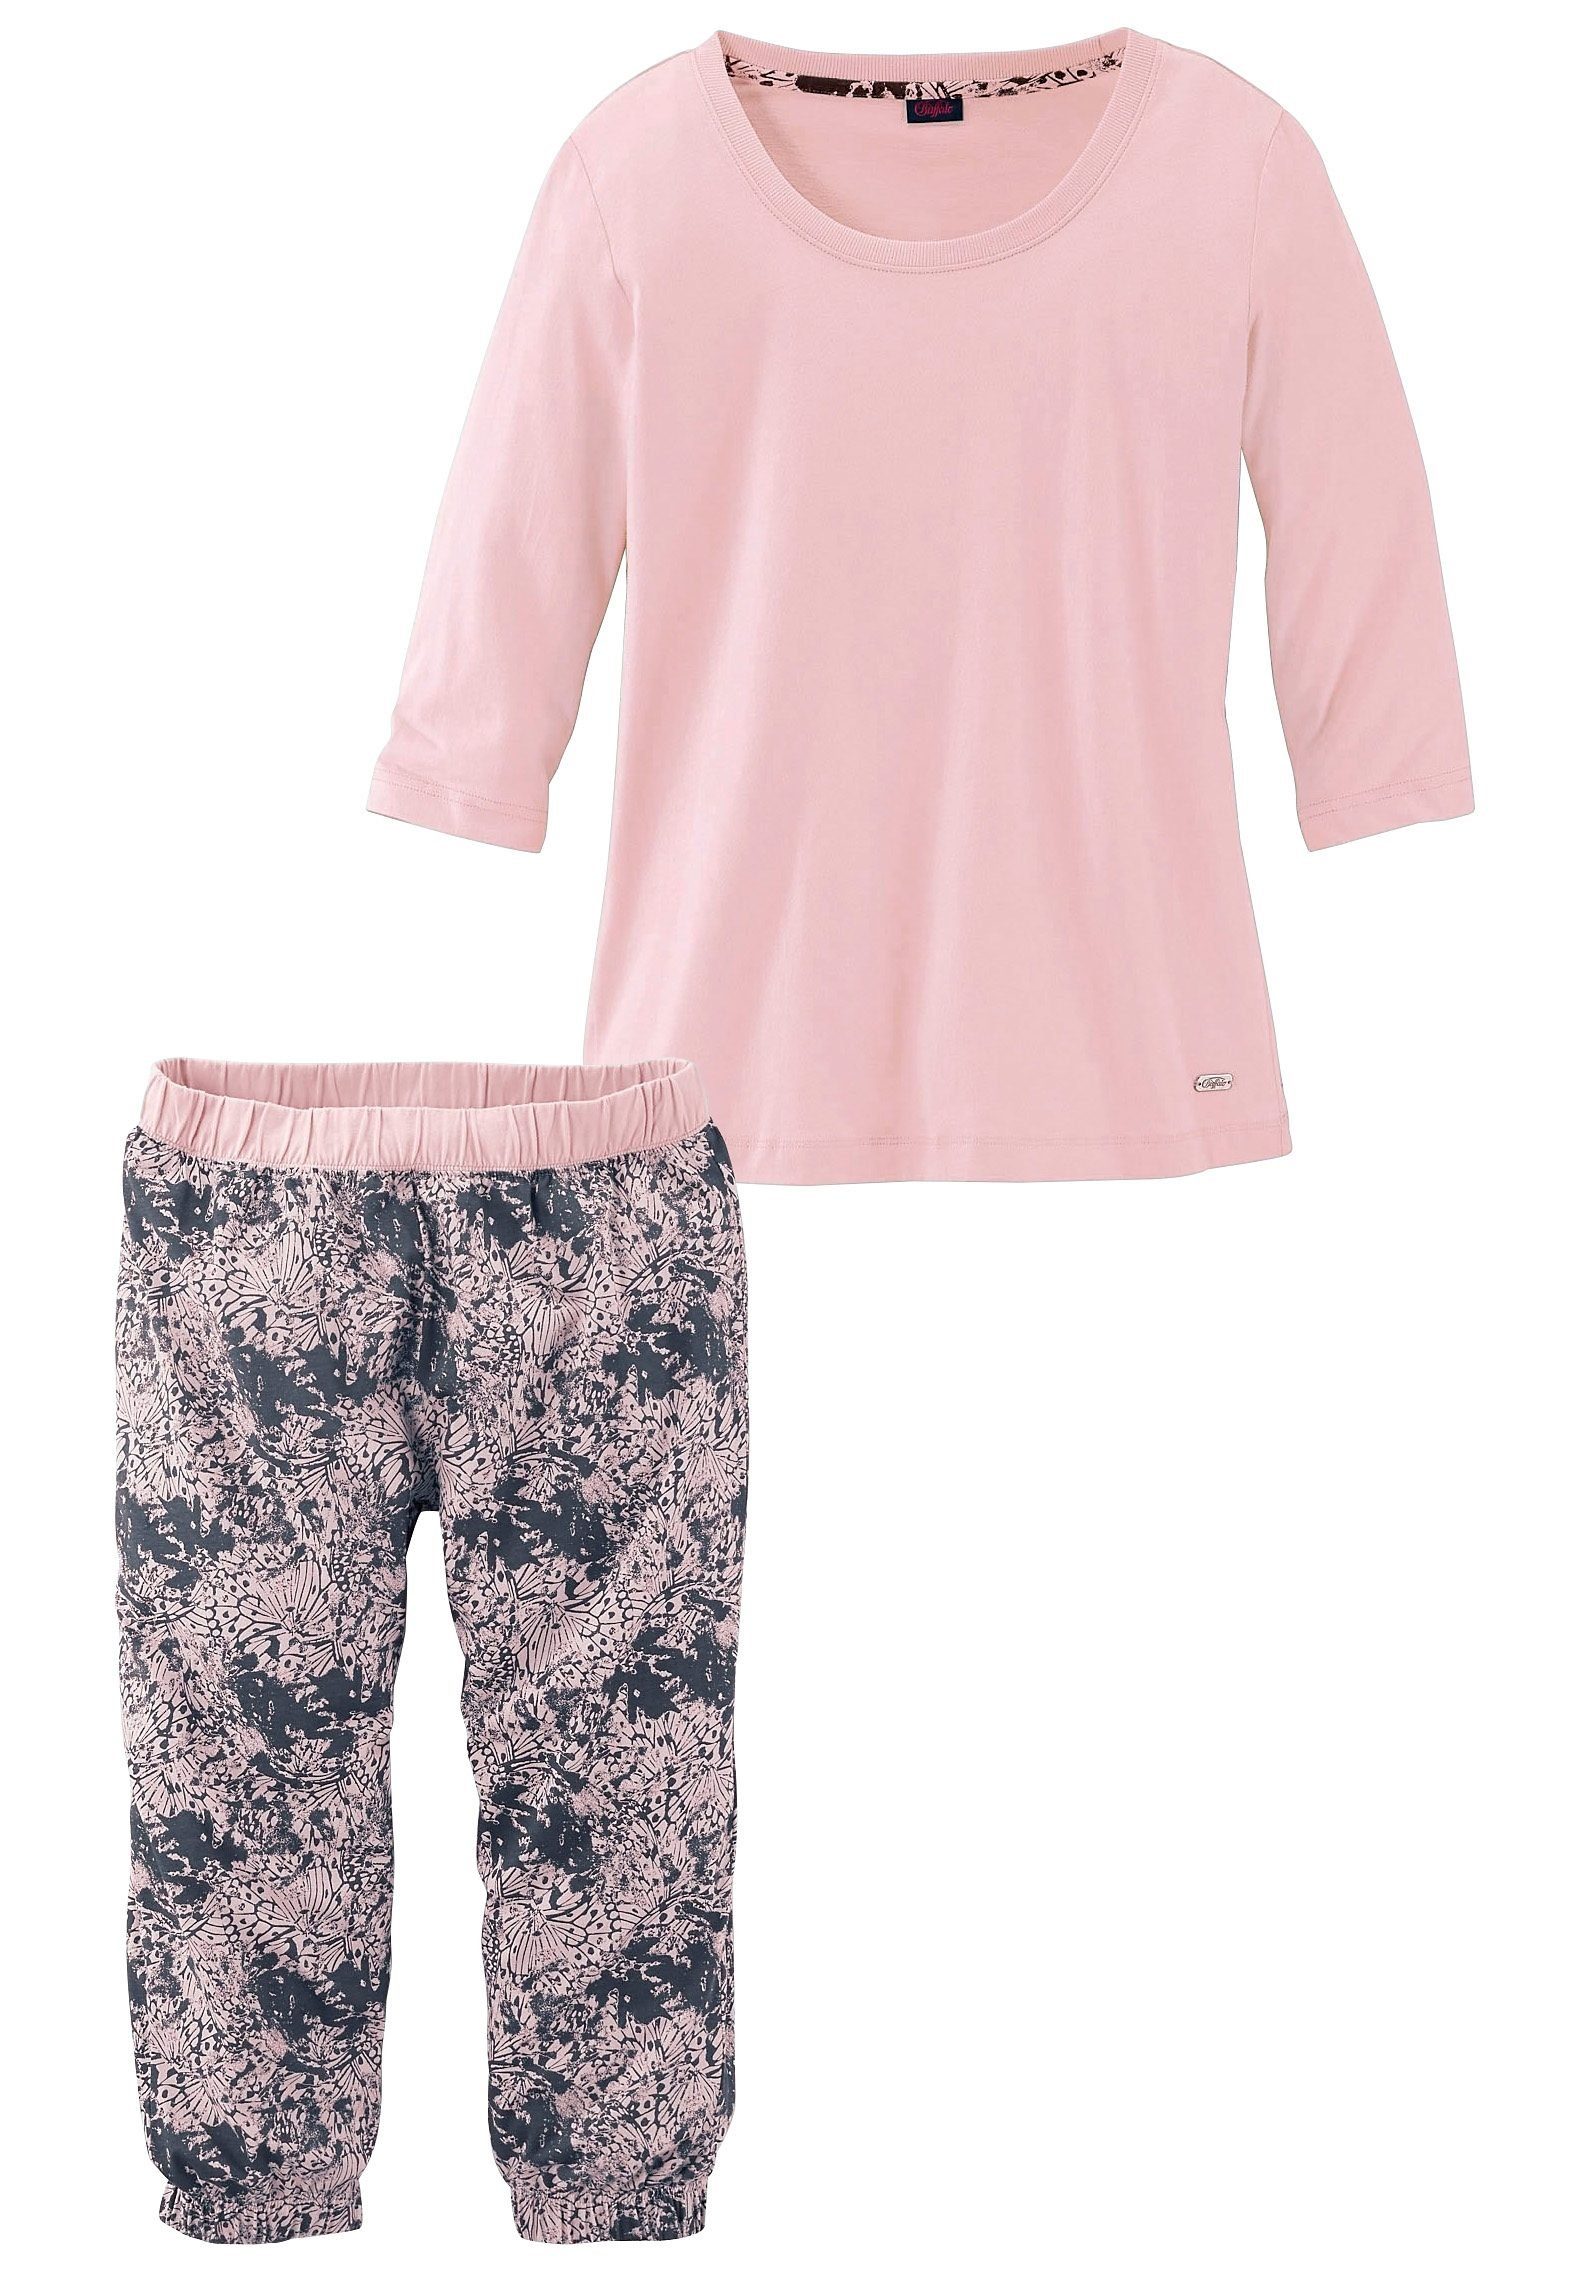 tlg., Buffalo 1 mit gemusterter Hose (2 rosa-gemustert Stück) Capri-Pyjama